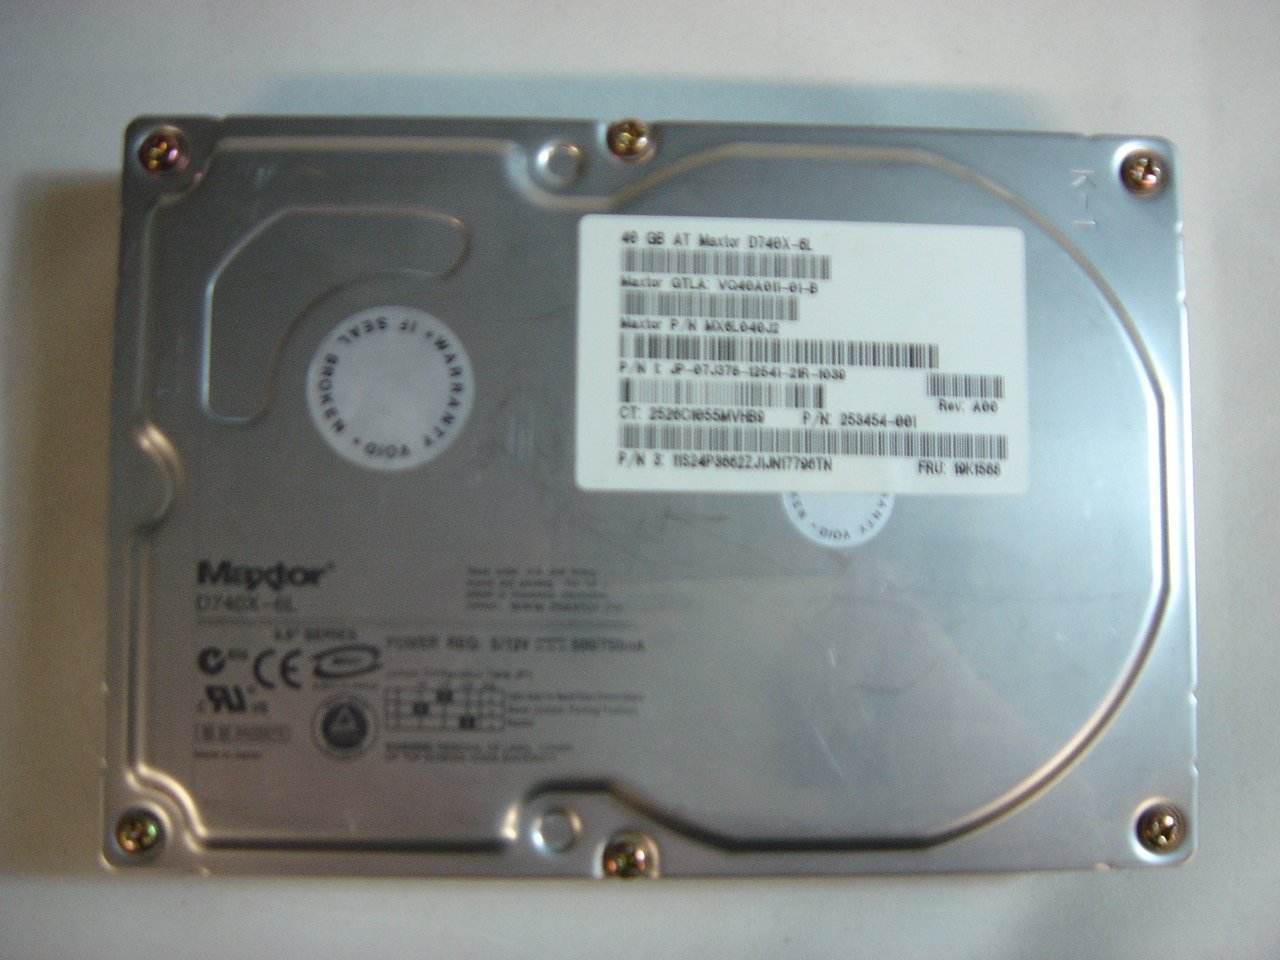 MC1804_VQ20A492_Maxtor Compaq 40Gb IDE 7200rpm 3.5in HDD - Image2